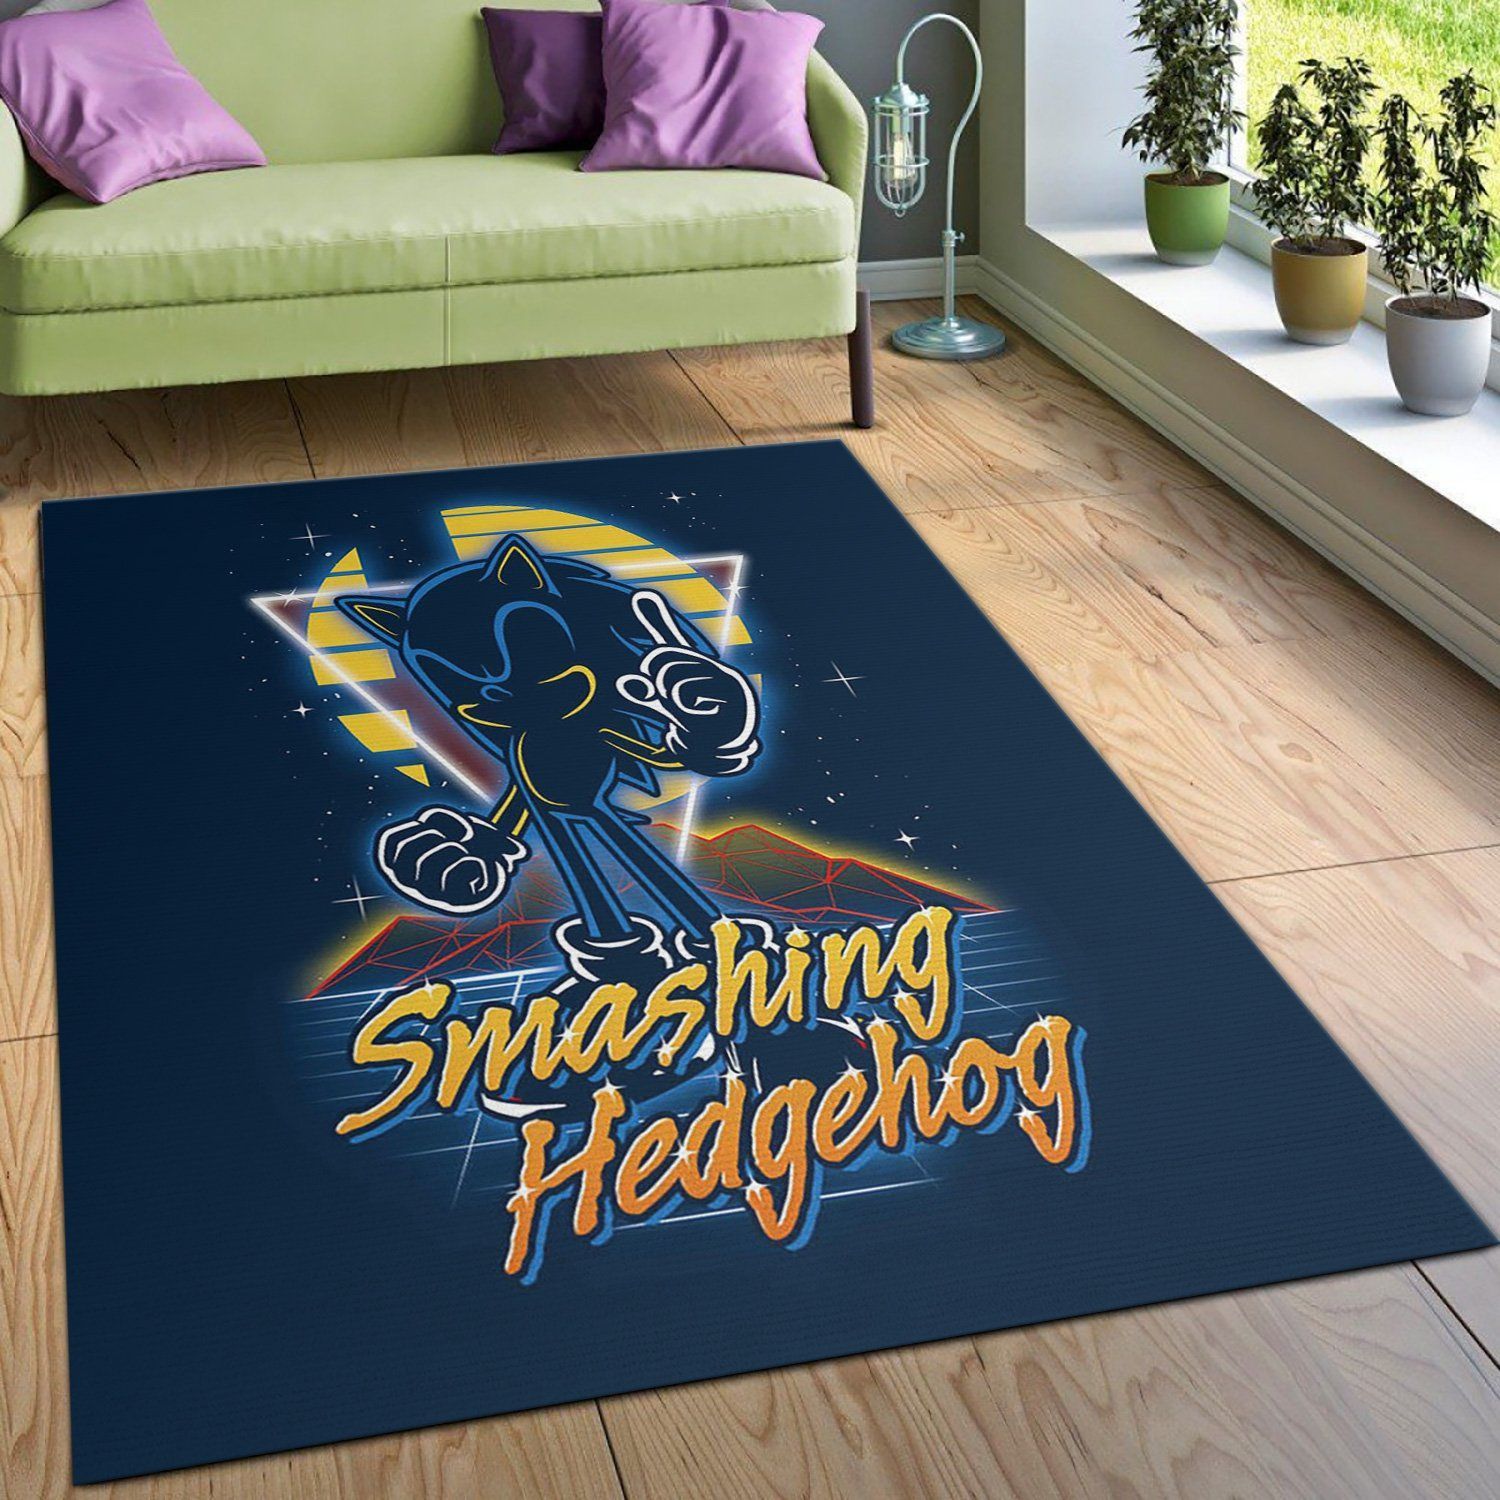 Retro Smashing Hedgehog Area Rug Carpet, Kitchen Rug, Floor Decor - Indoor Outdoor Rugs 2